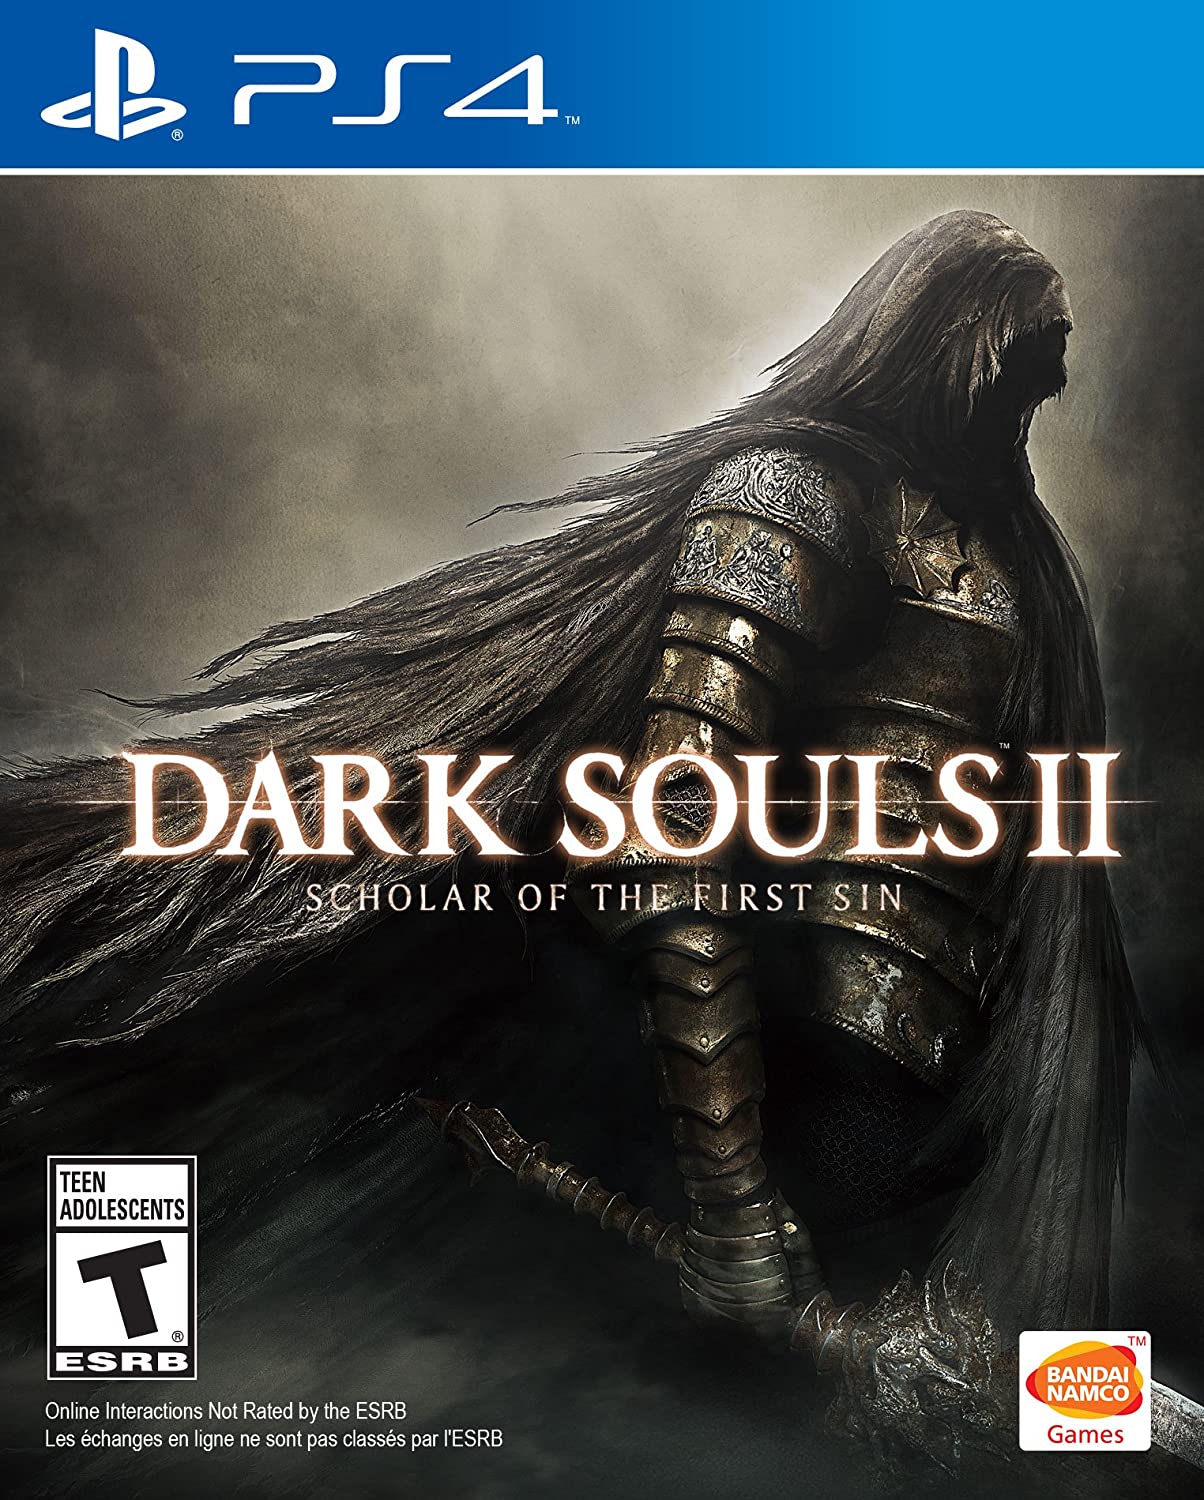 Dark Souls 2 Scholar of the First Sin, Bandai Namco, PlayStation 4, 722674120272 - image 2 of 6